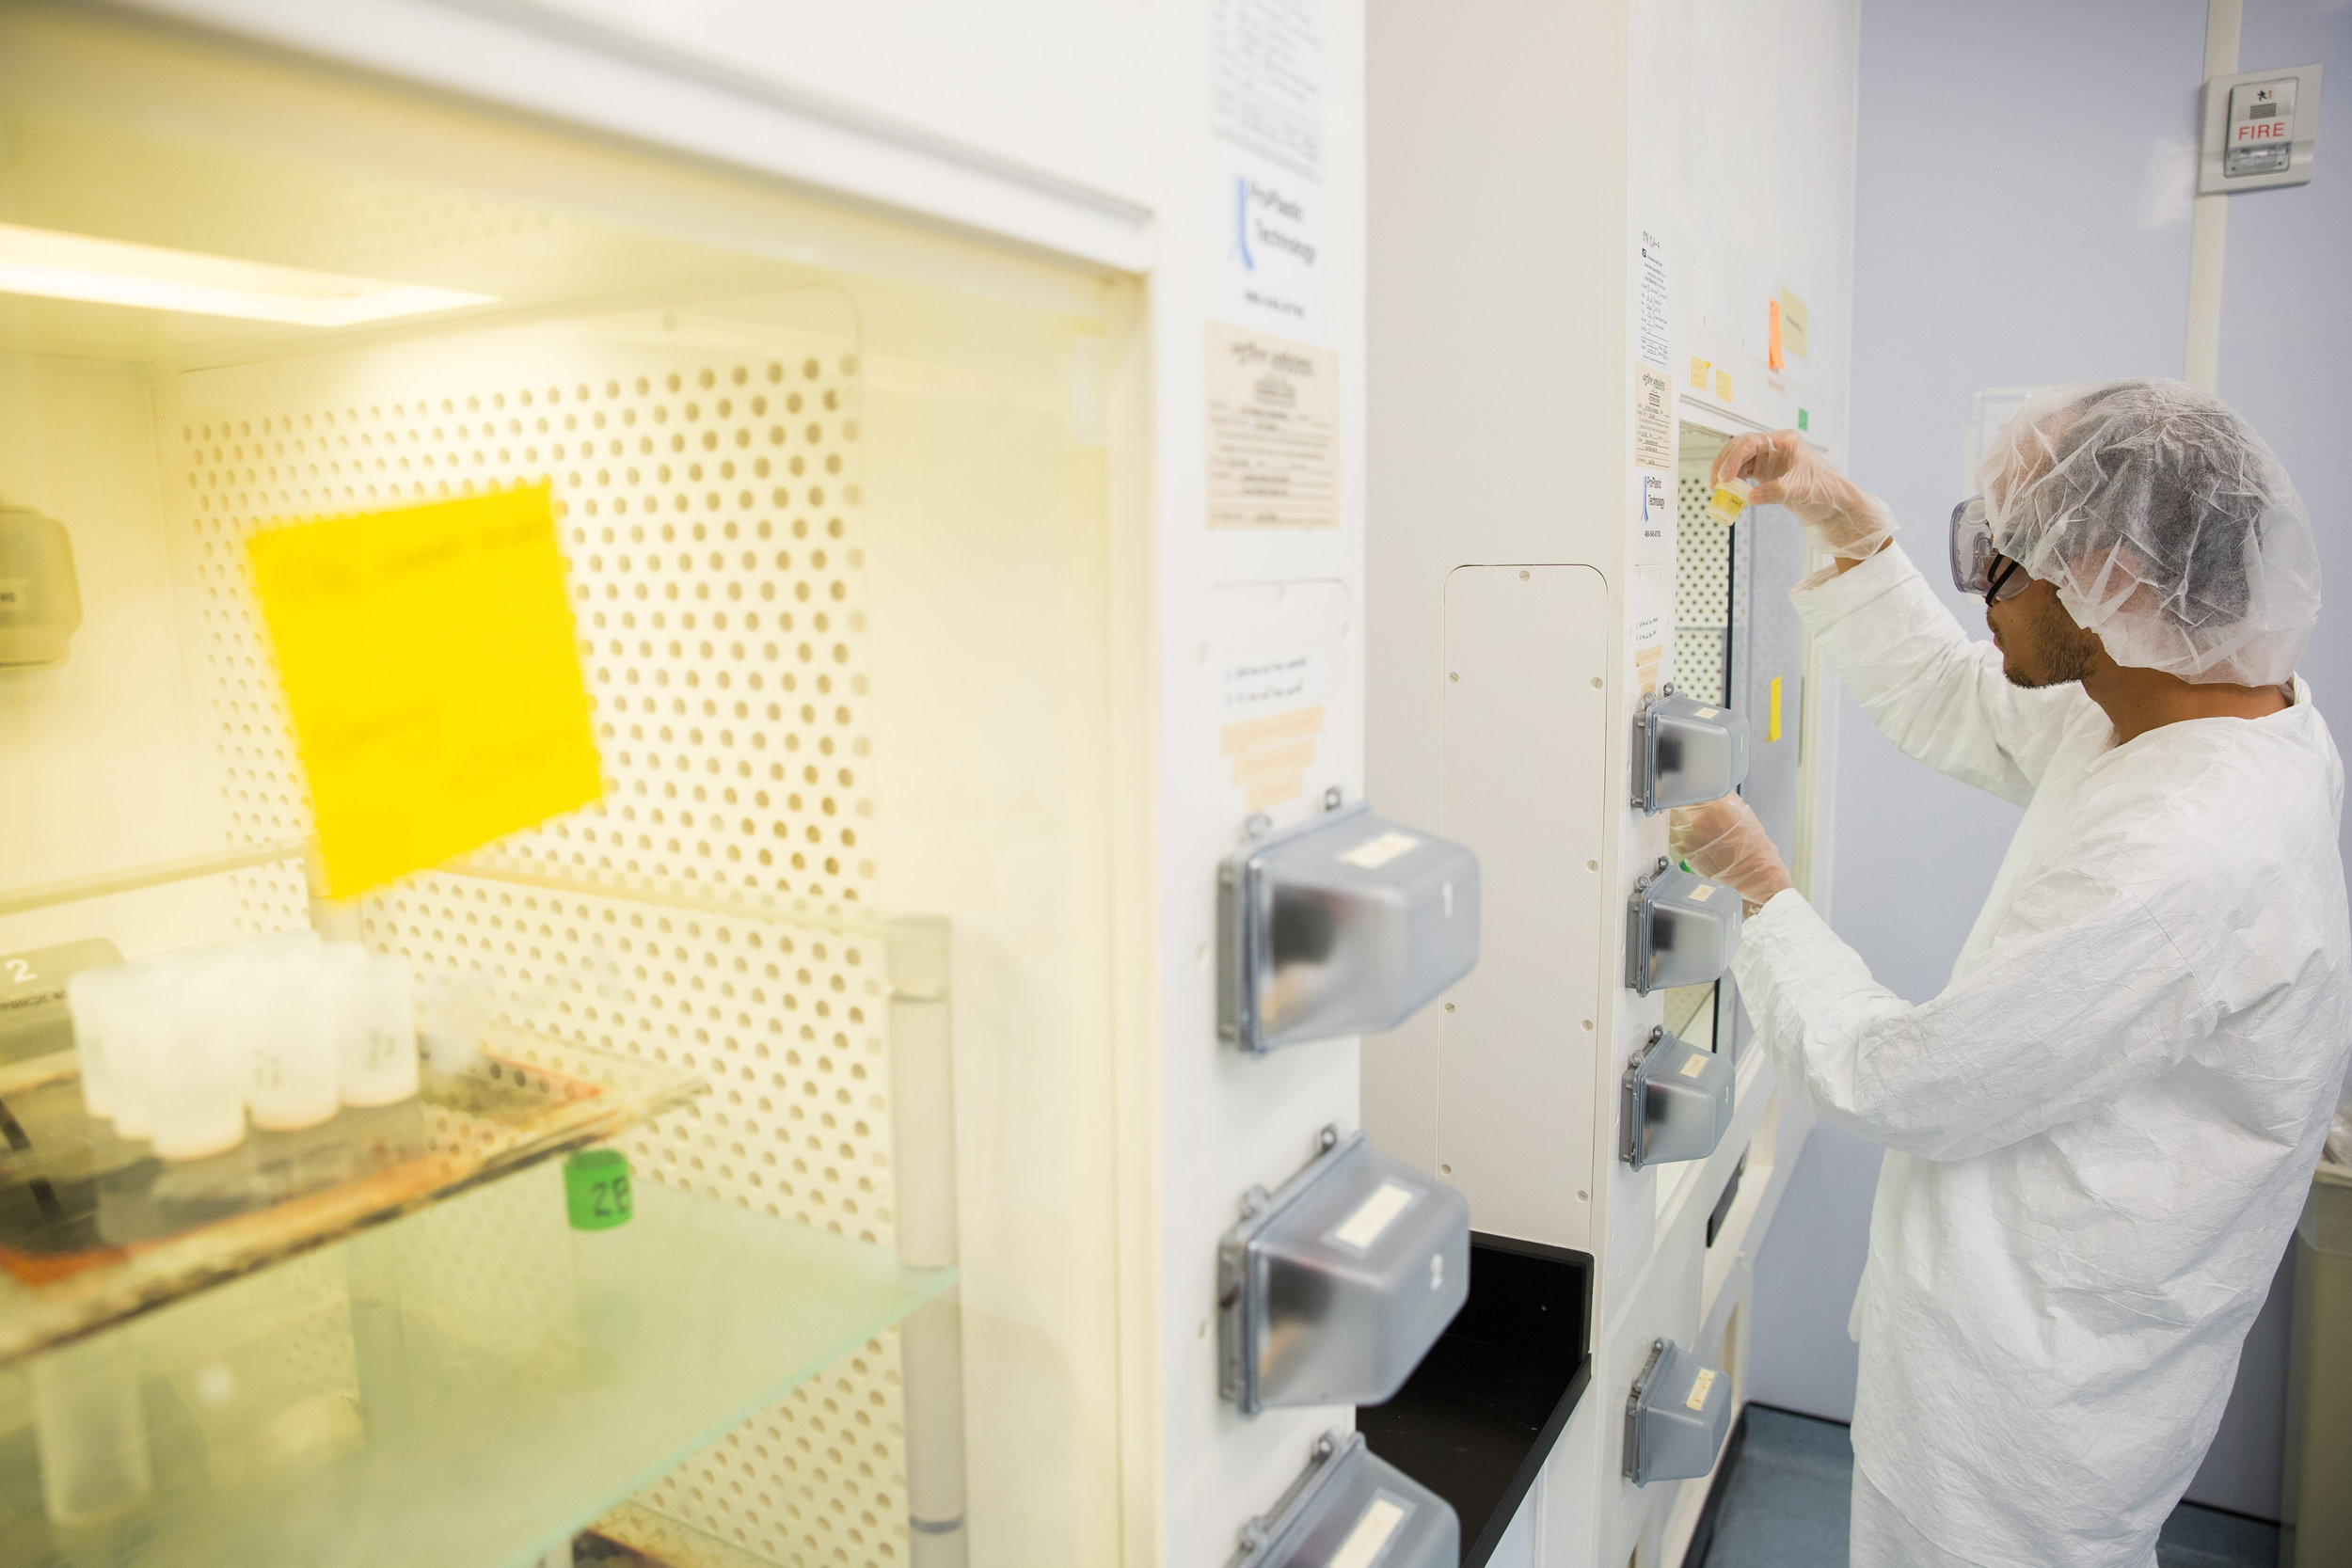 Dr. Wang Zheng purifies Hg isotopes in the KFLEB clean lab